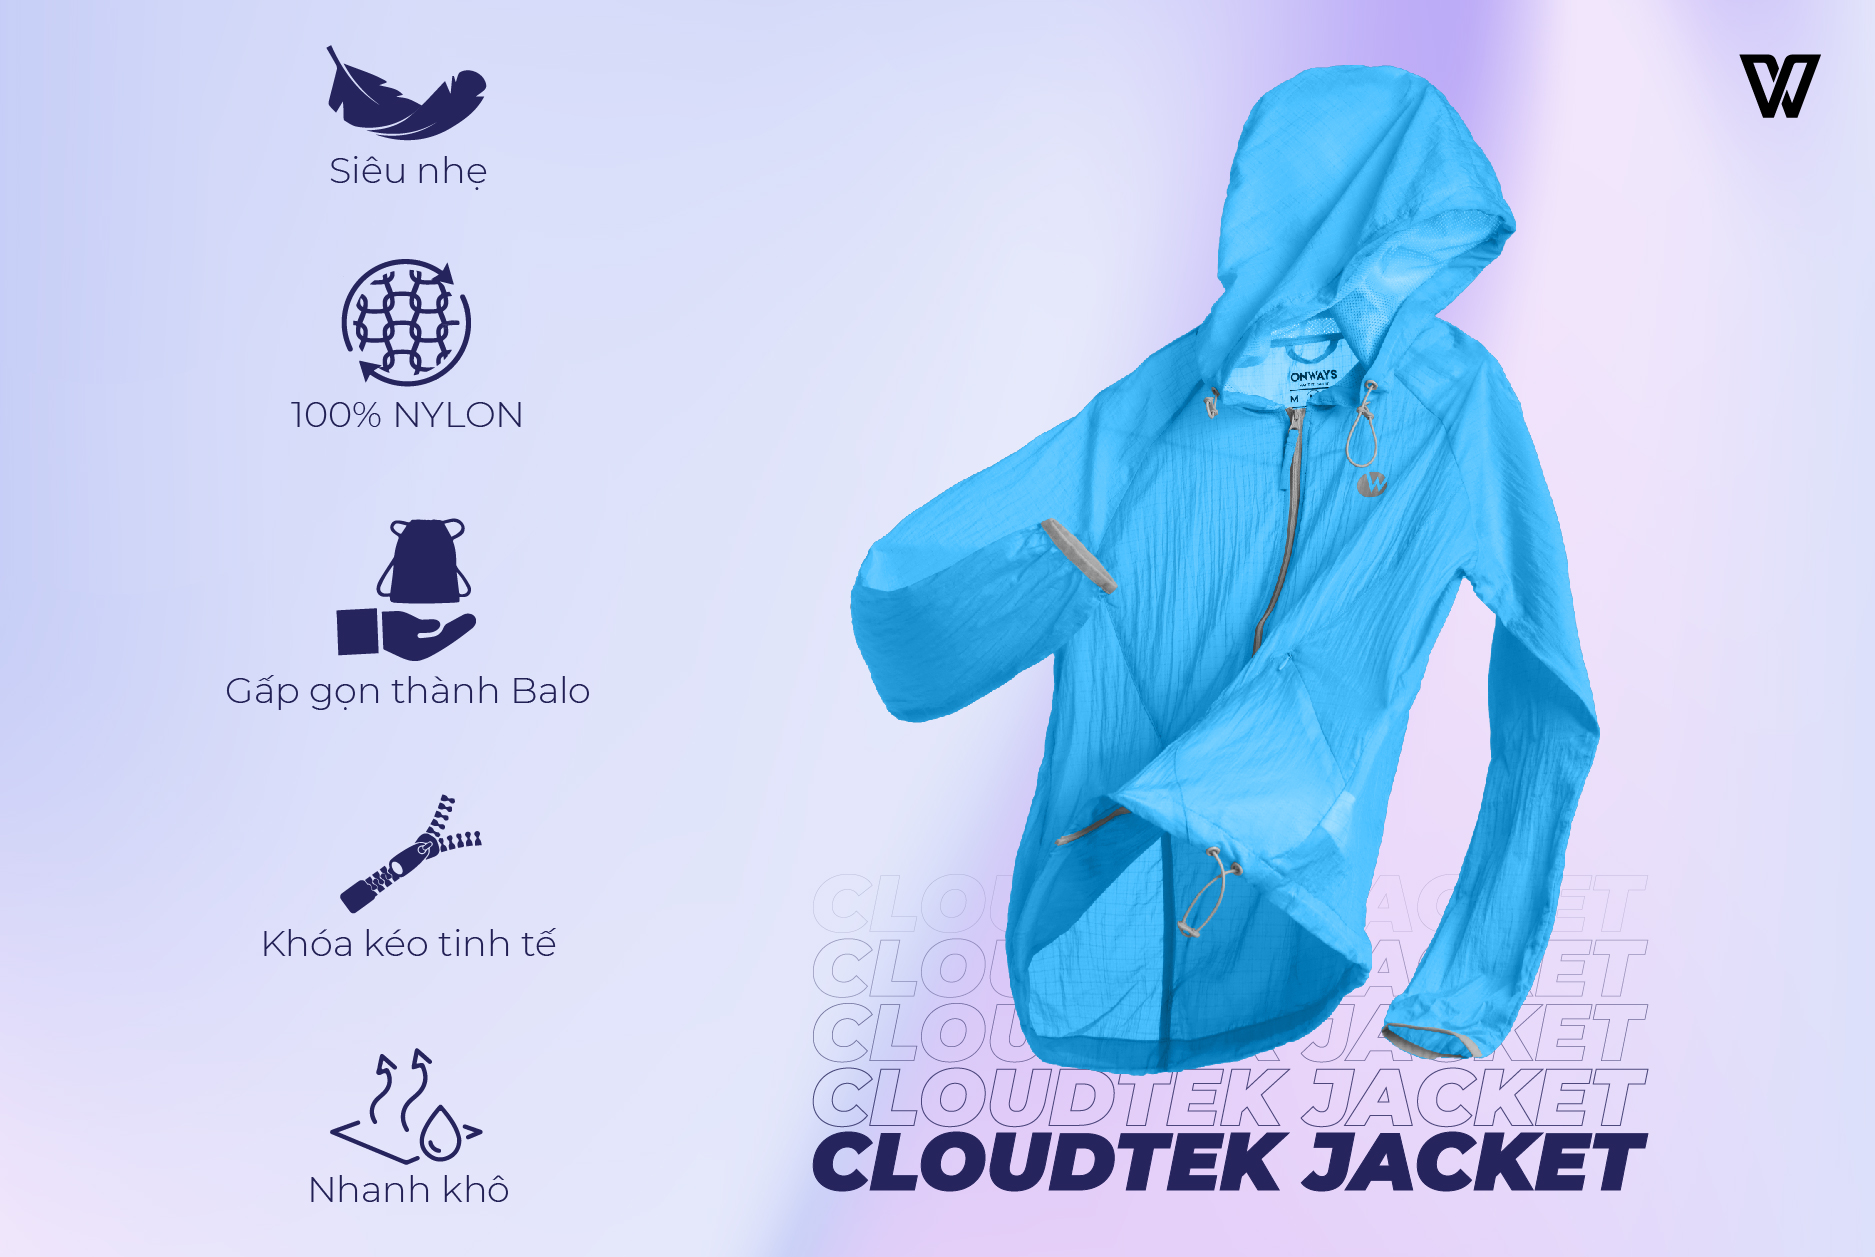 cloudtek_jacket-01_1e0790cdfbc54ab8a920f461aaf2ba03.jpg